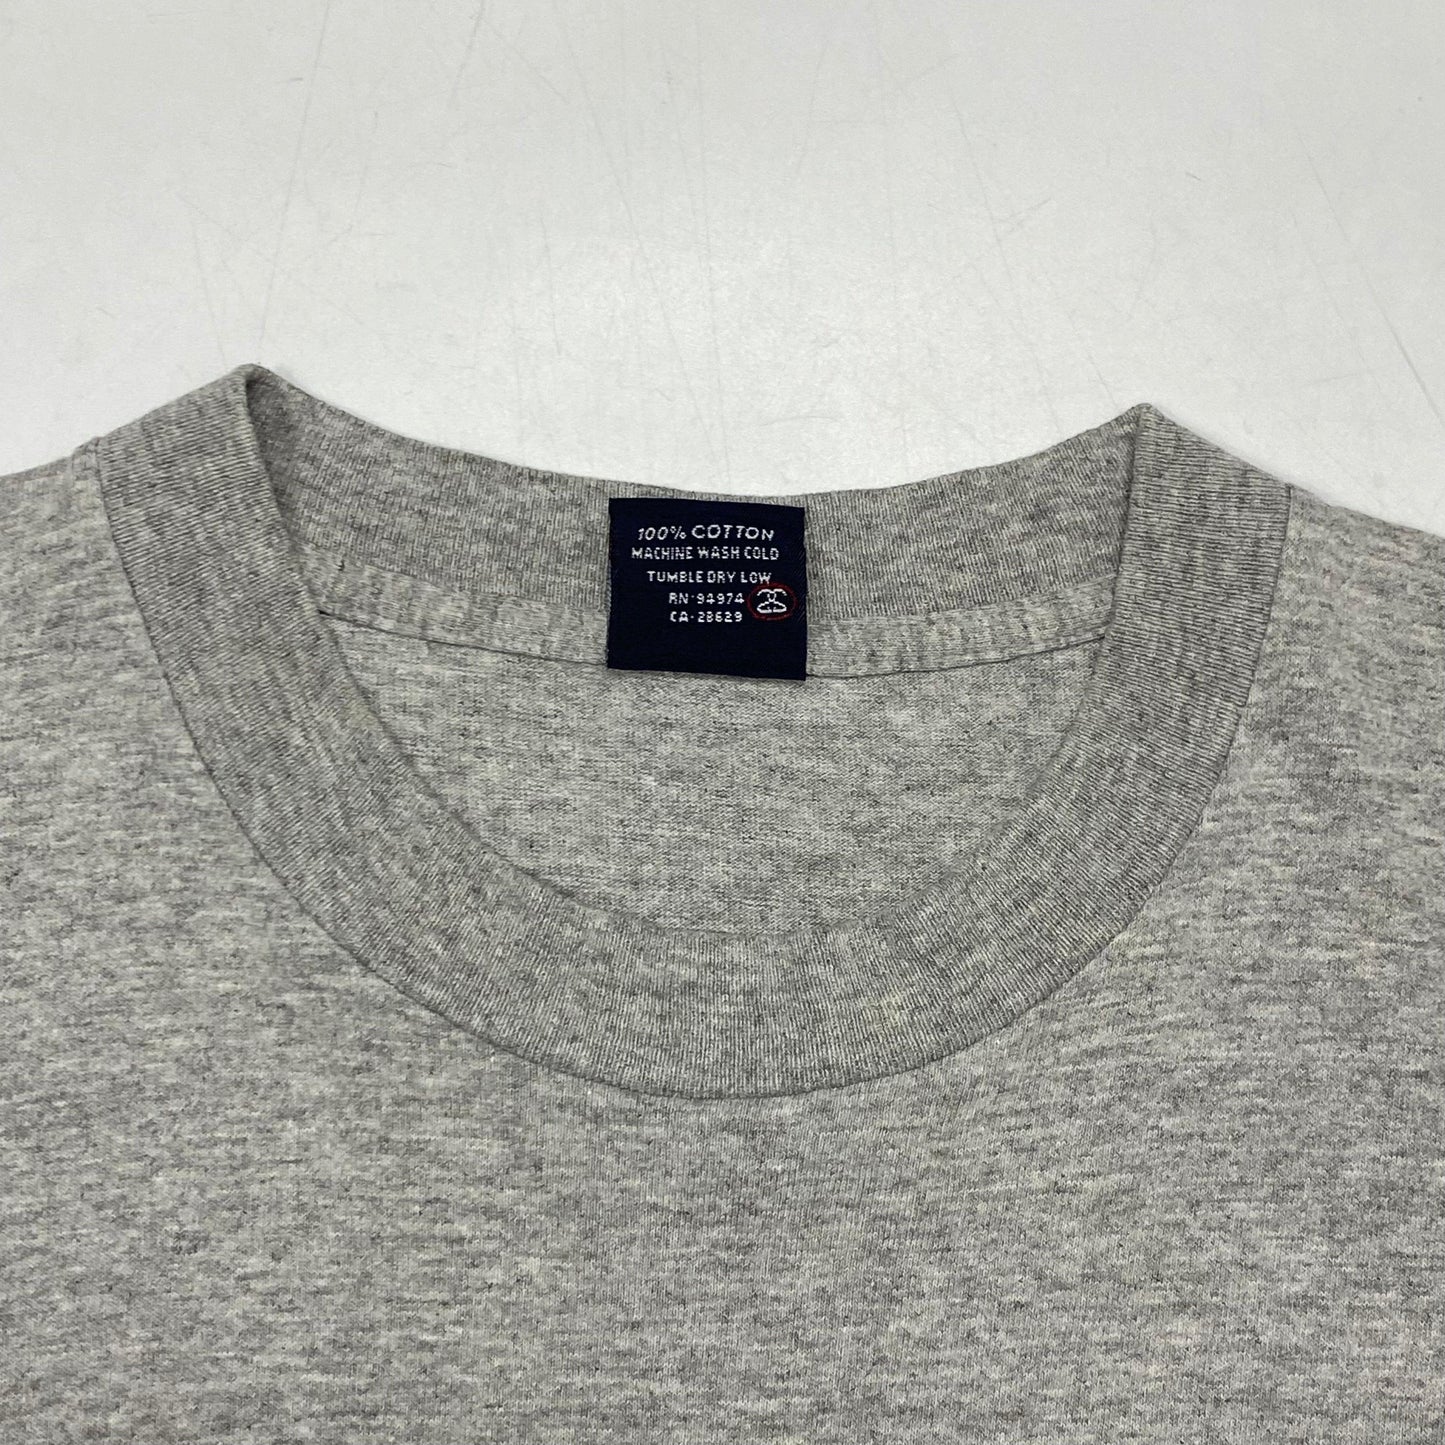 Stussy 90’s 3m Reflective Shutter Logo T-shirt - XL - Known Source